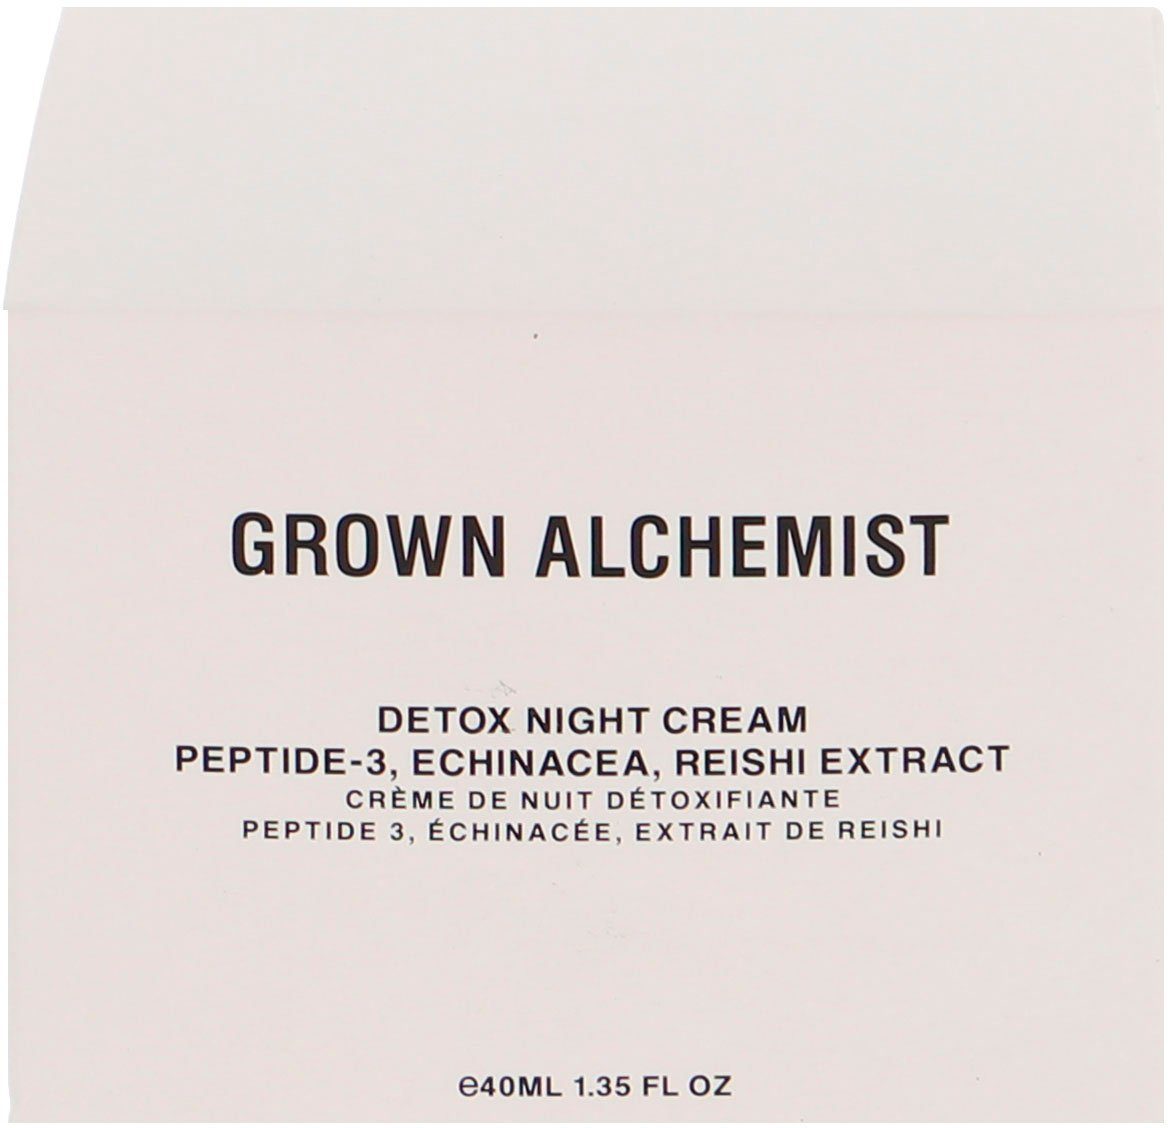 GROWN ALCHEMIST Reishi Peptide-3, Cream, Nachtcreme Extract Detox Echinacea, Night